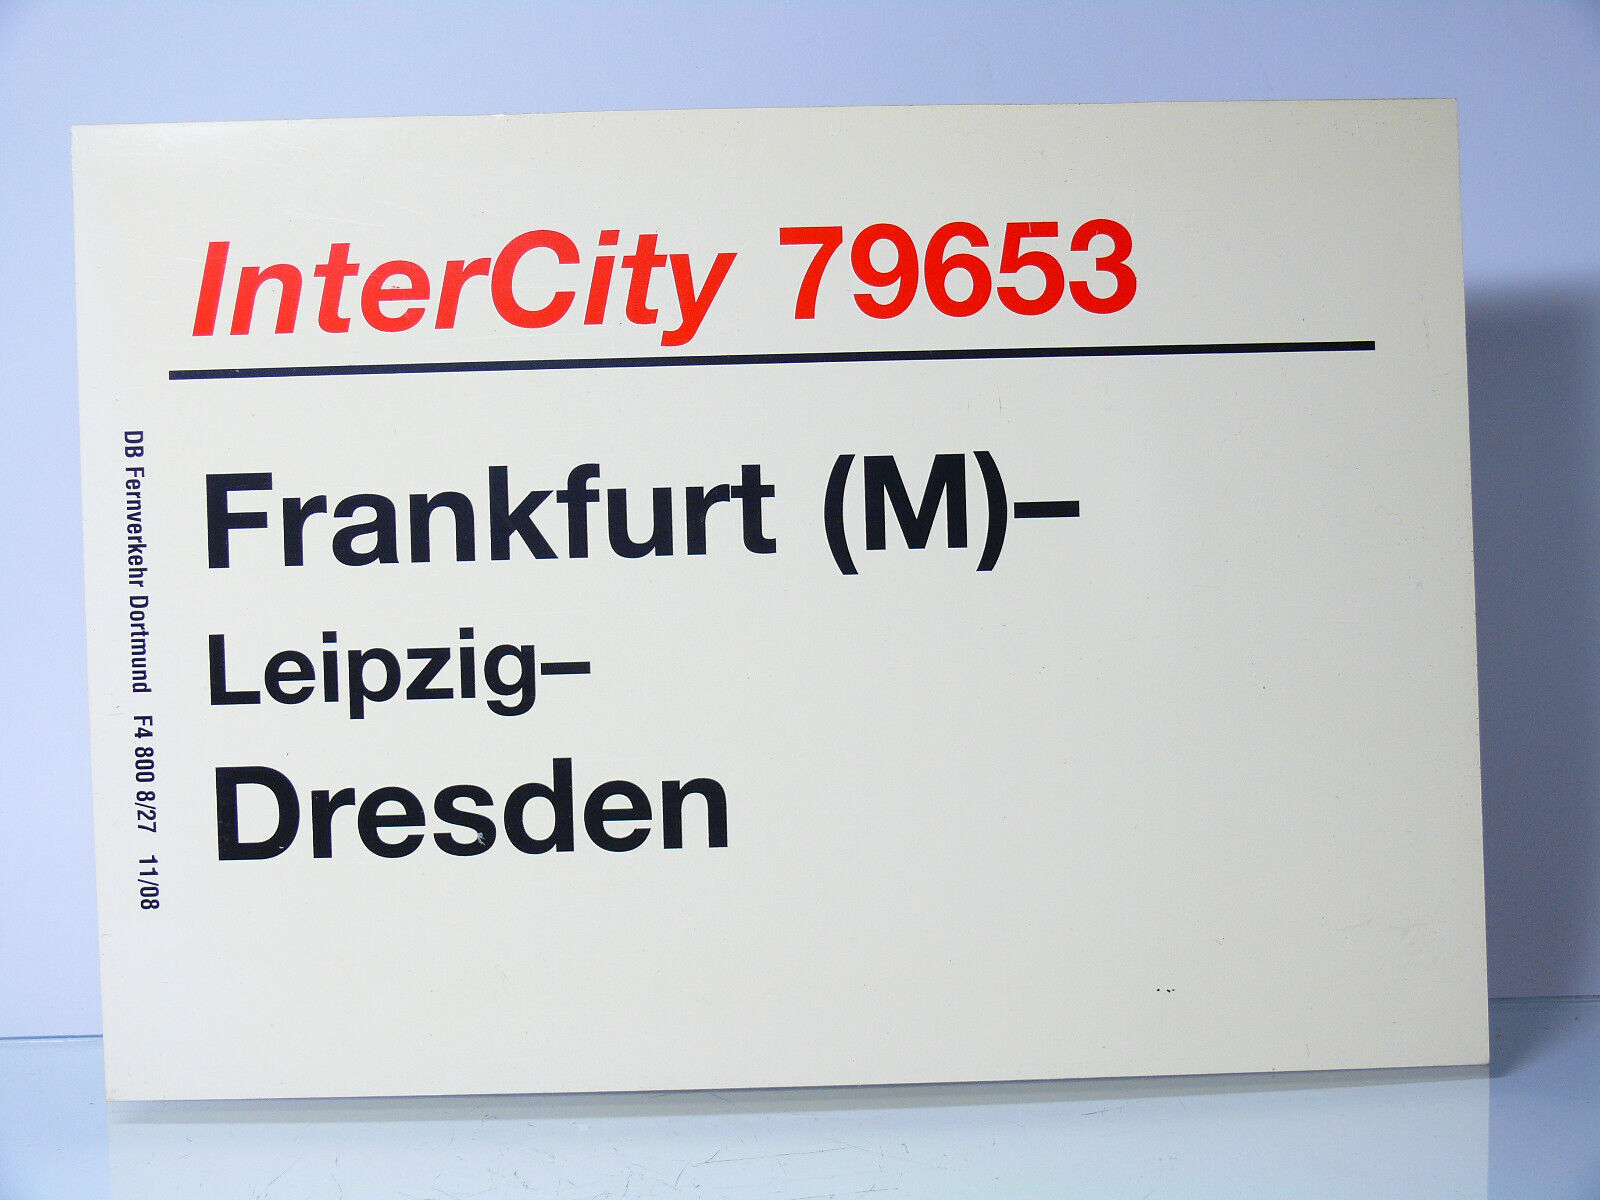 Intercity 79653 Train Route Sign - Frankfurt (M) - Dresden